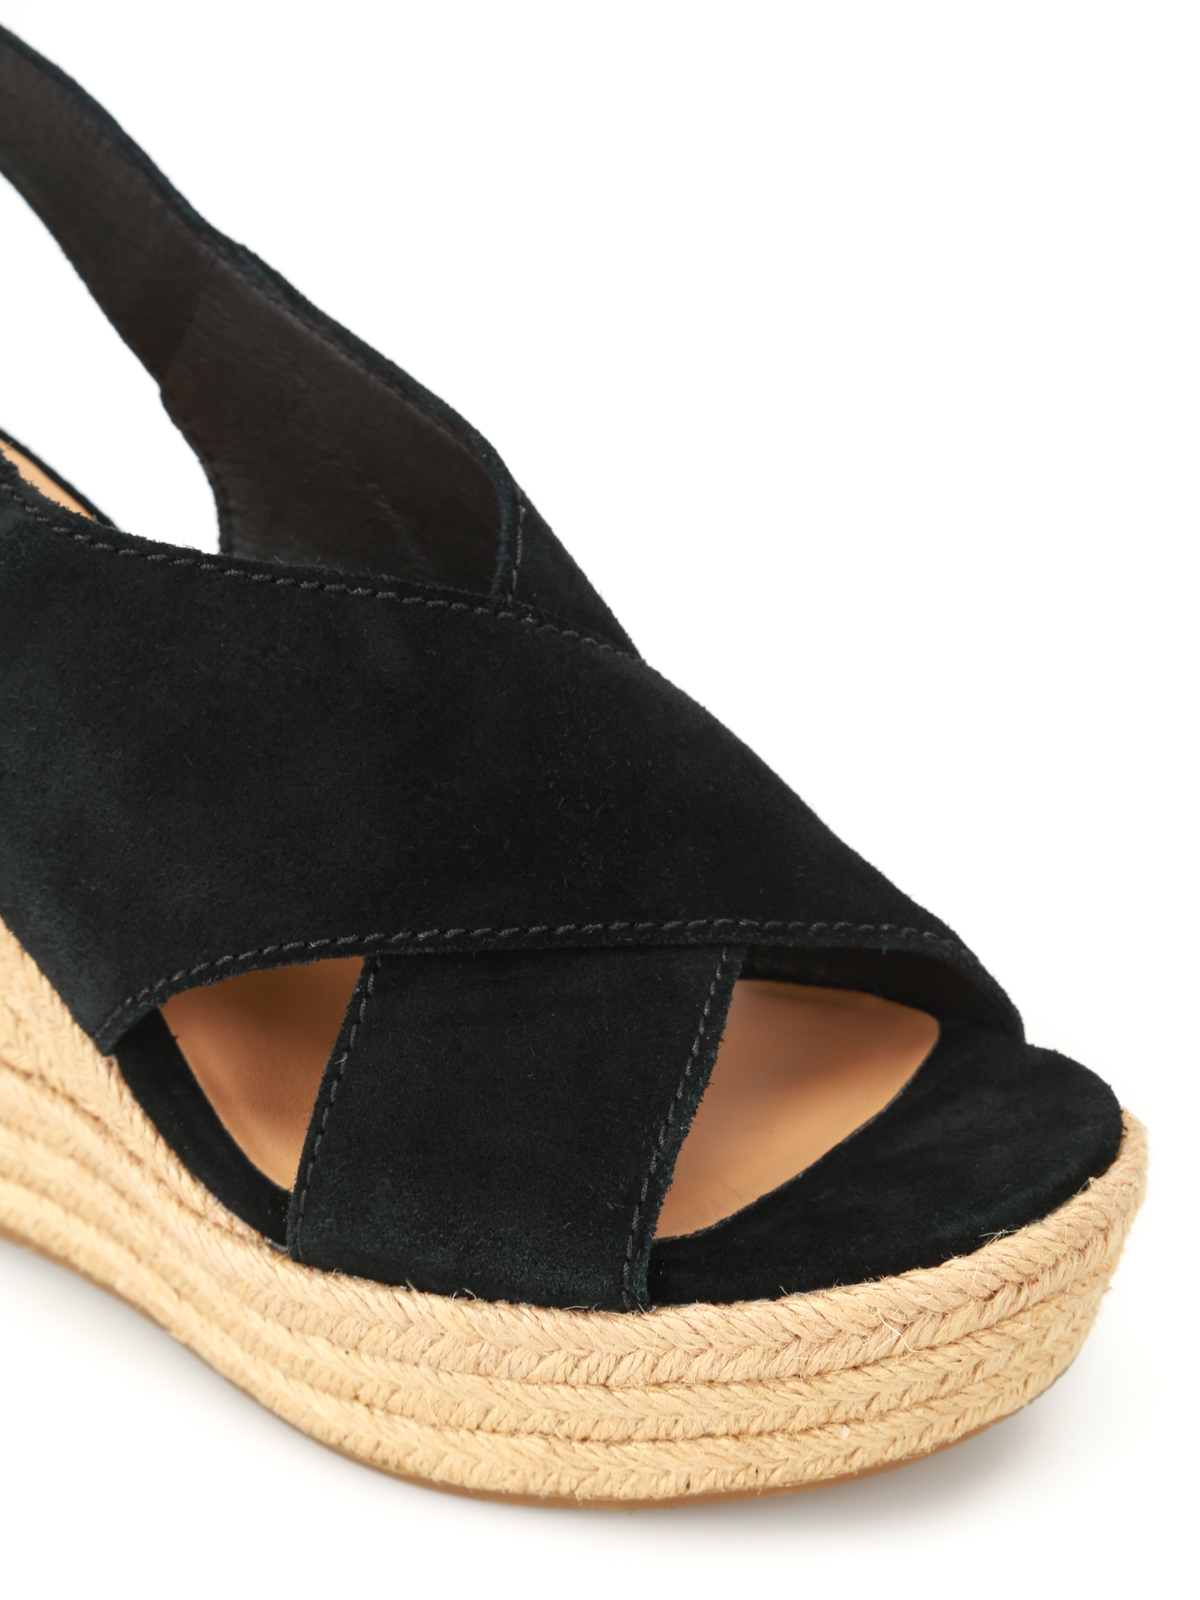 Ugg - Harlow black suede wedge sandals 